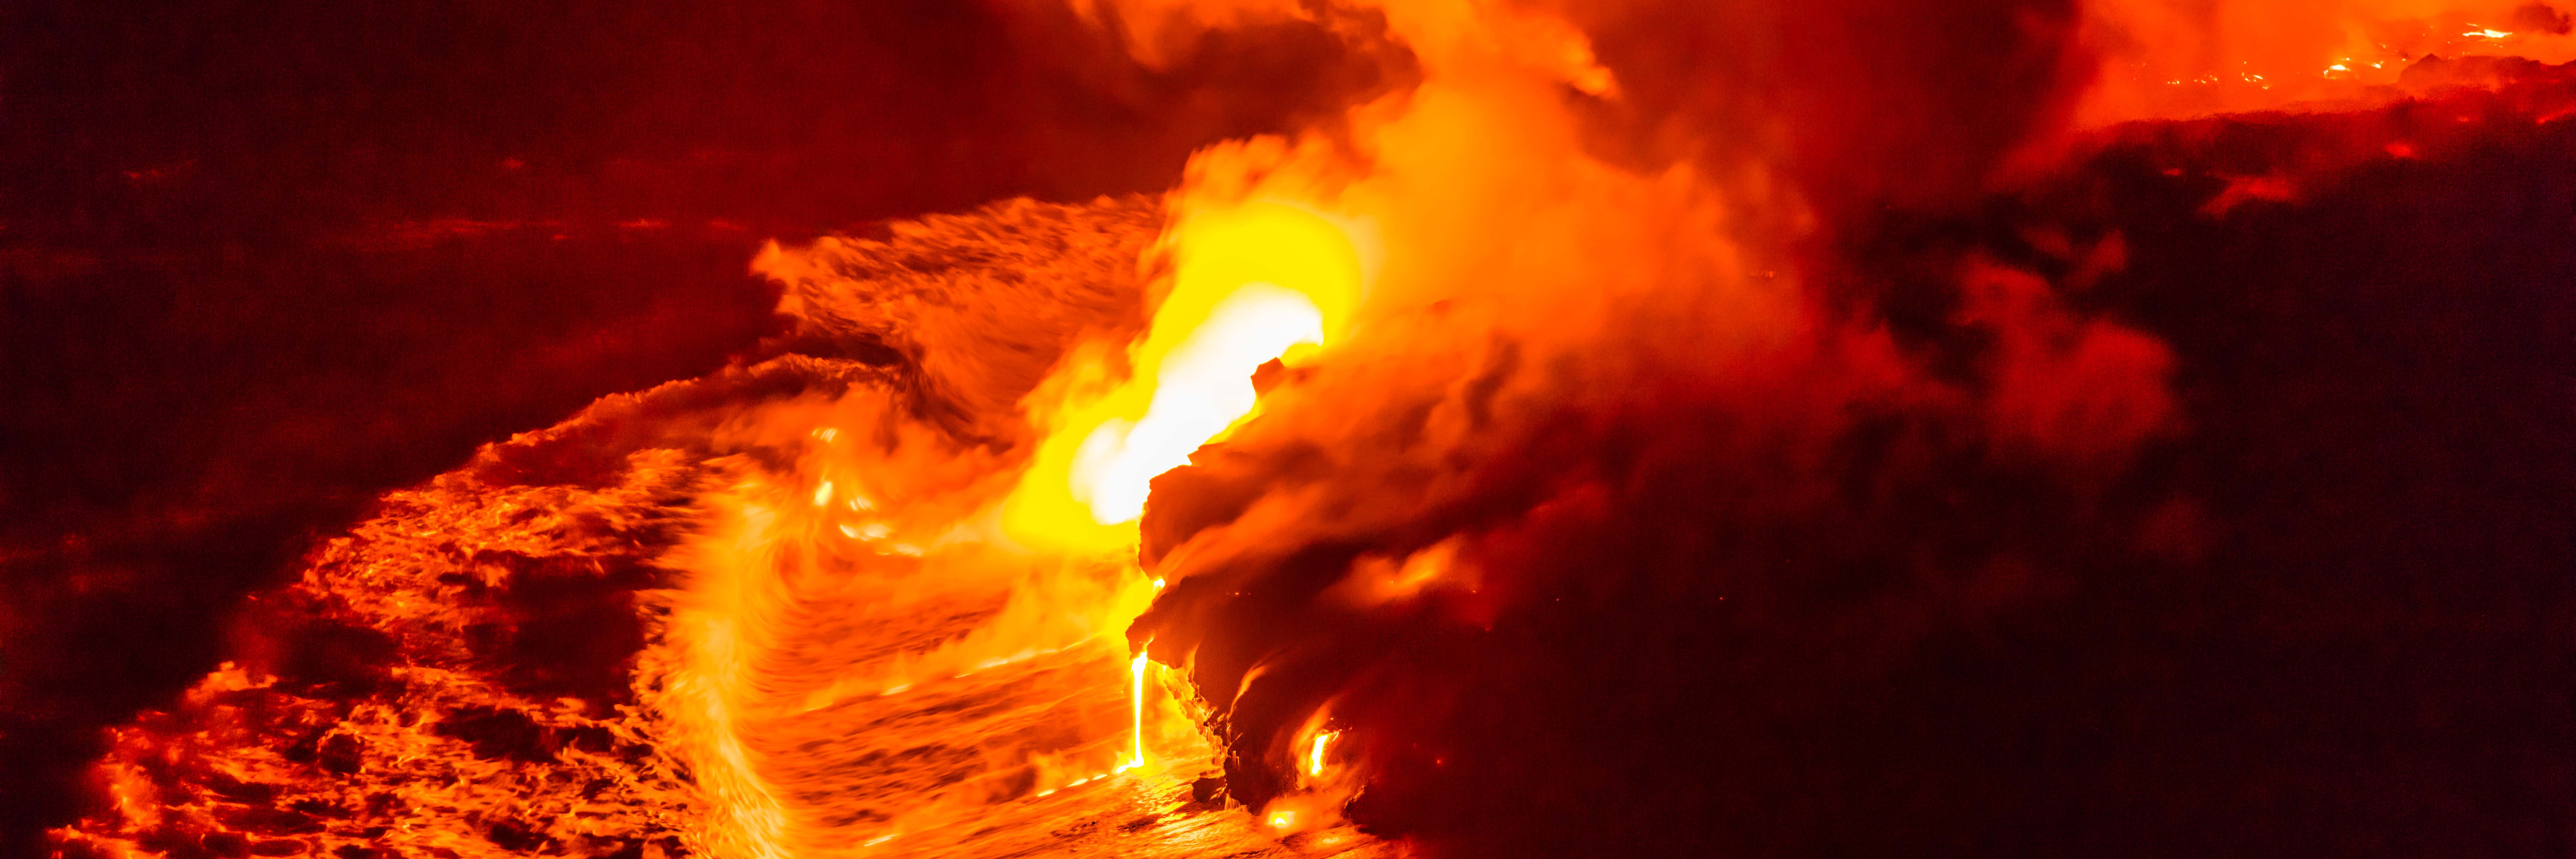 Lava flow falling in ocean waves in Hawaii from Hawaiian Kilauea volcano at night. Molten lava washed by the sea water crashing in, Big Island, USA.